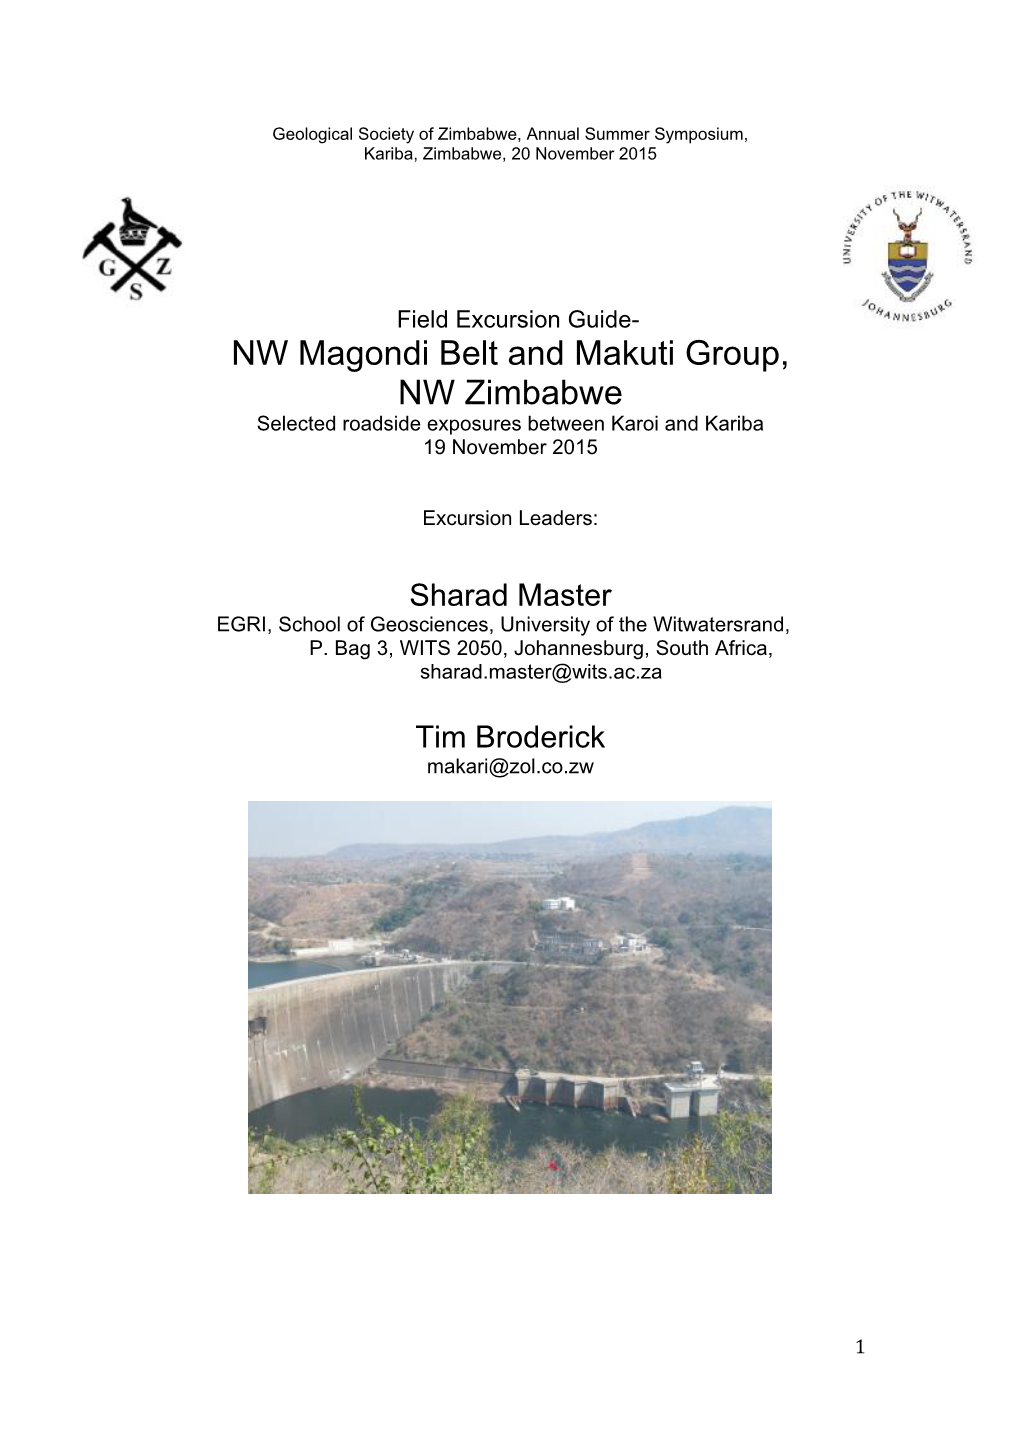 NW Magondi Belt and Makuti Group, NW Zimbabwe Selected Roadside Exposures Between Karoi and Kariba 19 November 2015